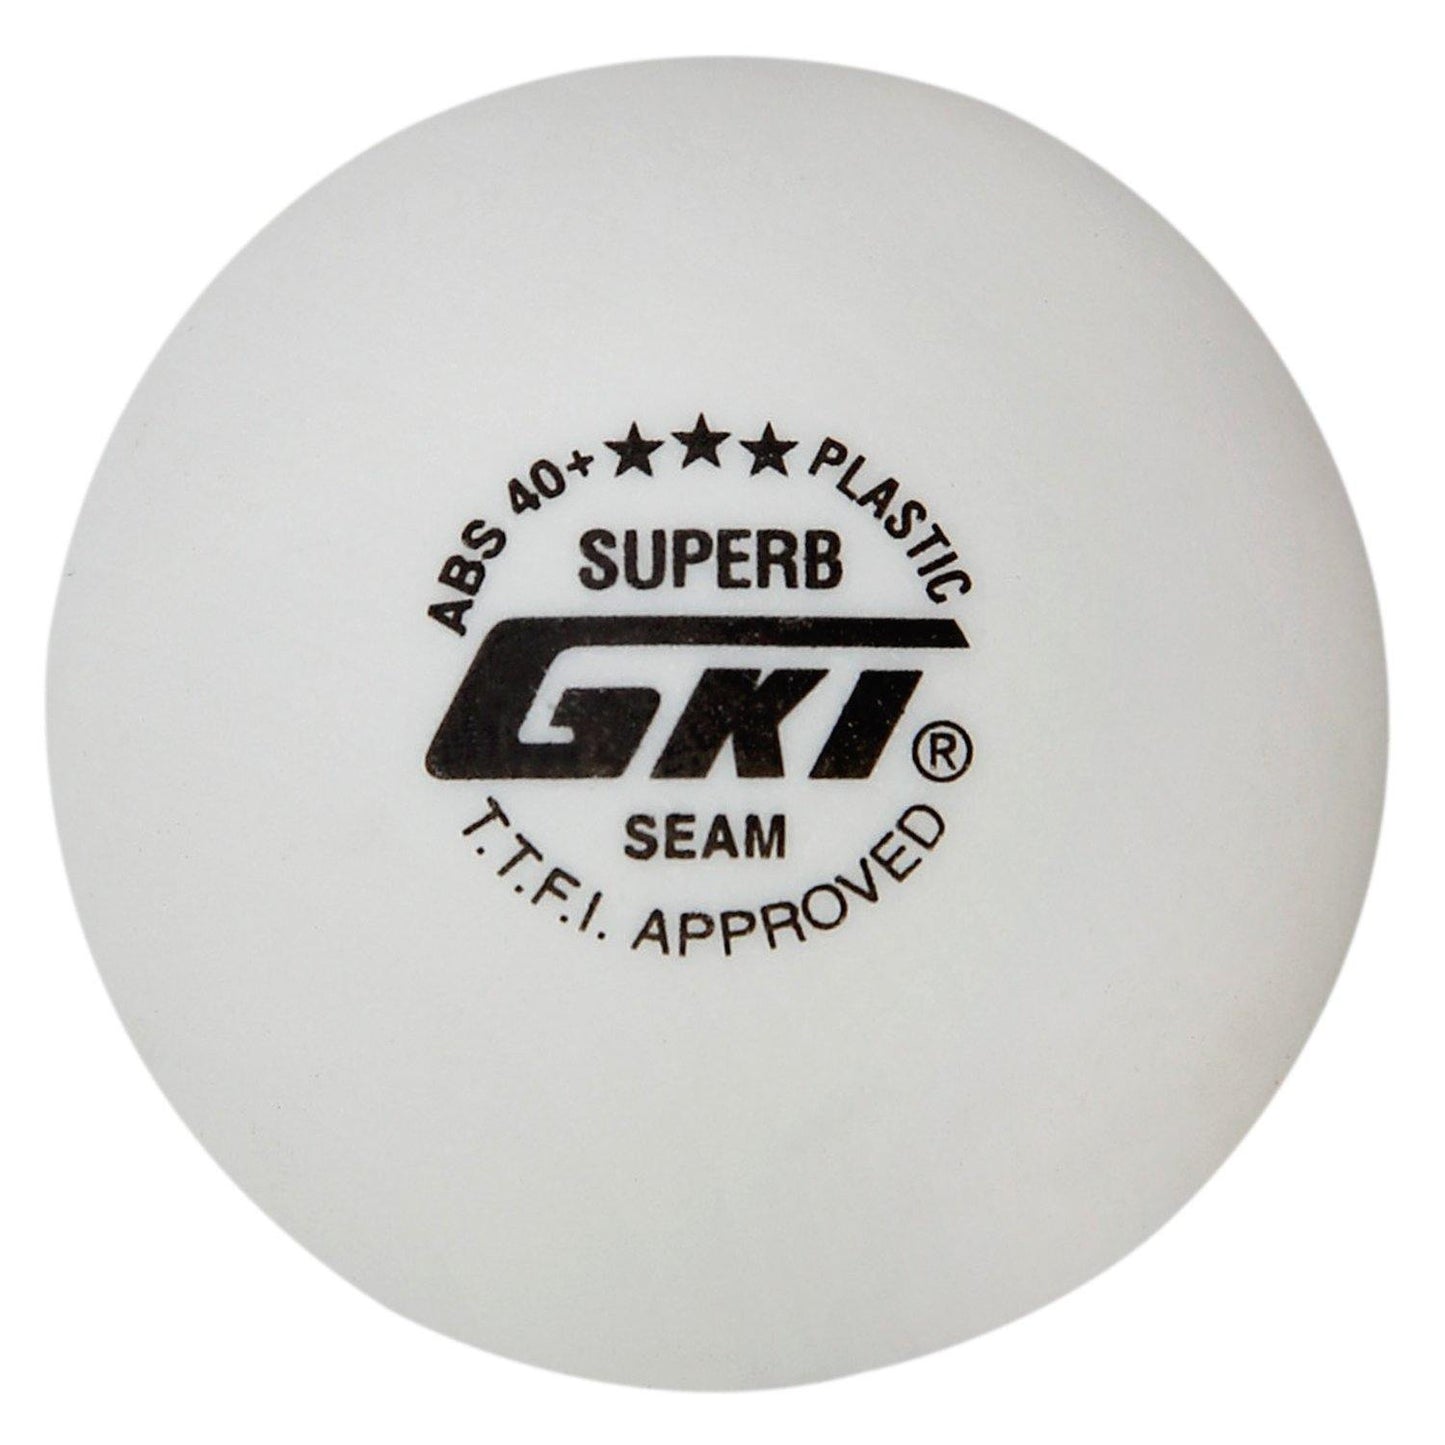 GKI Superb 3 Star ABS Plastic 40+ Table Tennis Ball, Pack of 6 (White) - Best Price online Prokicksports.com